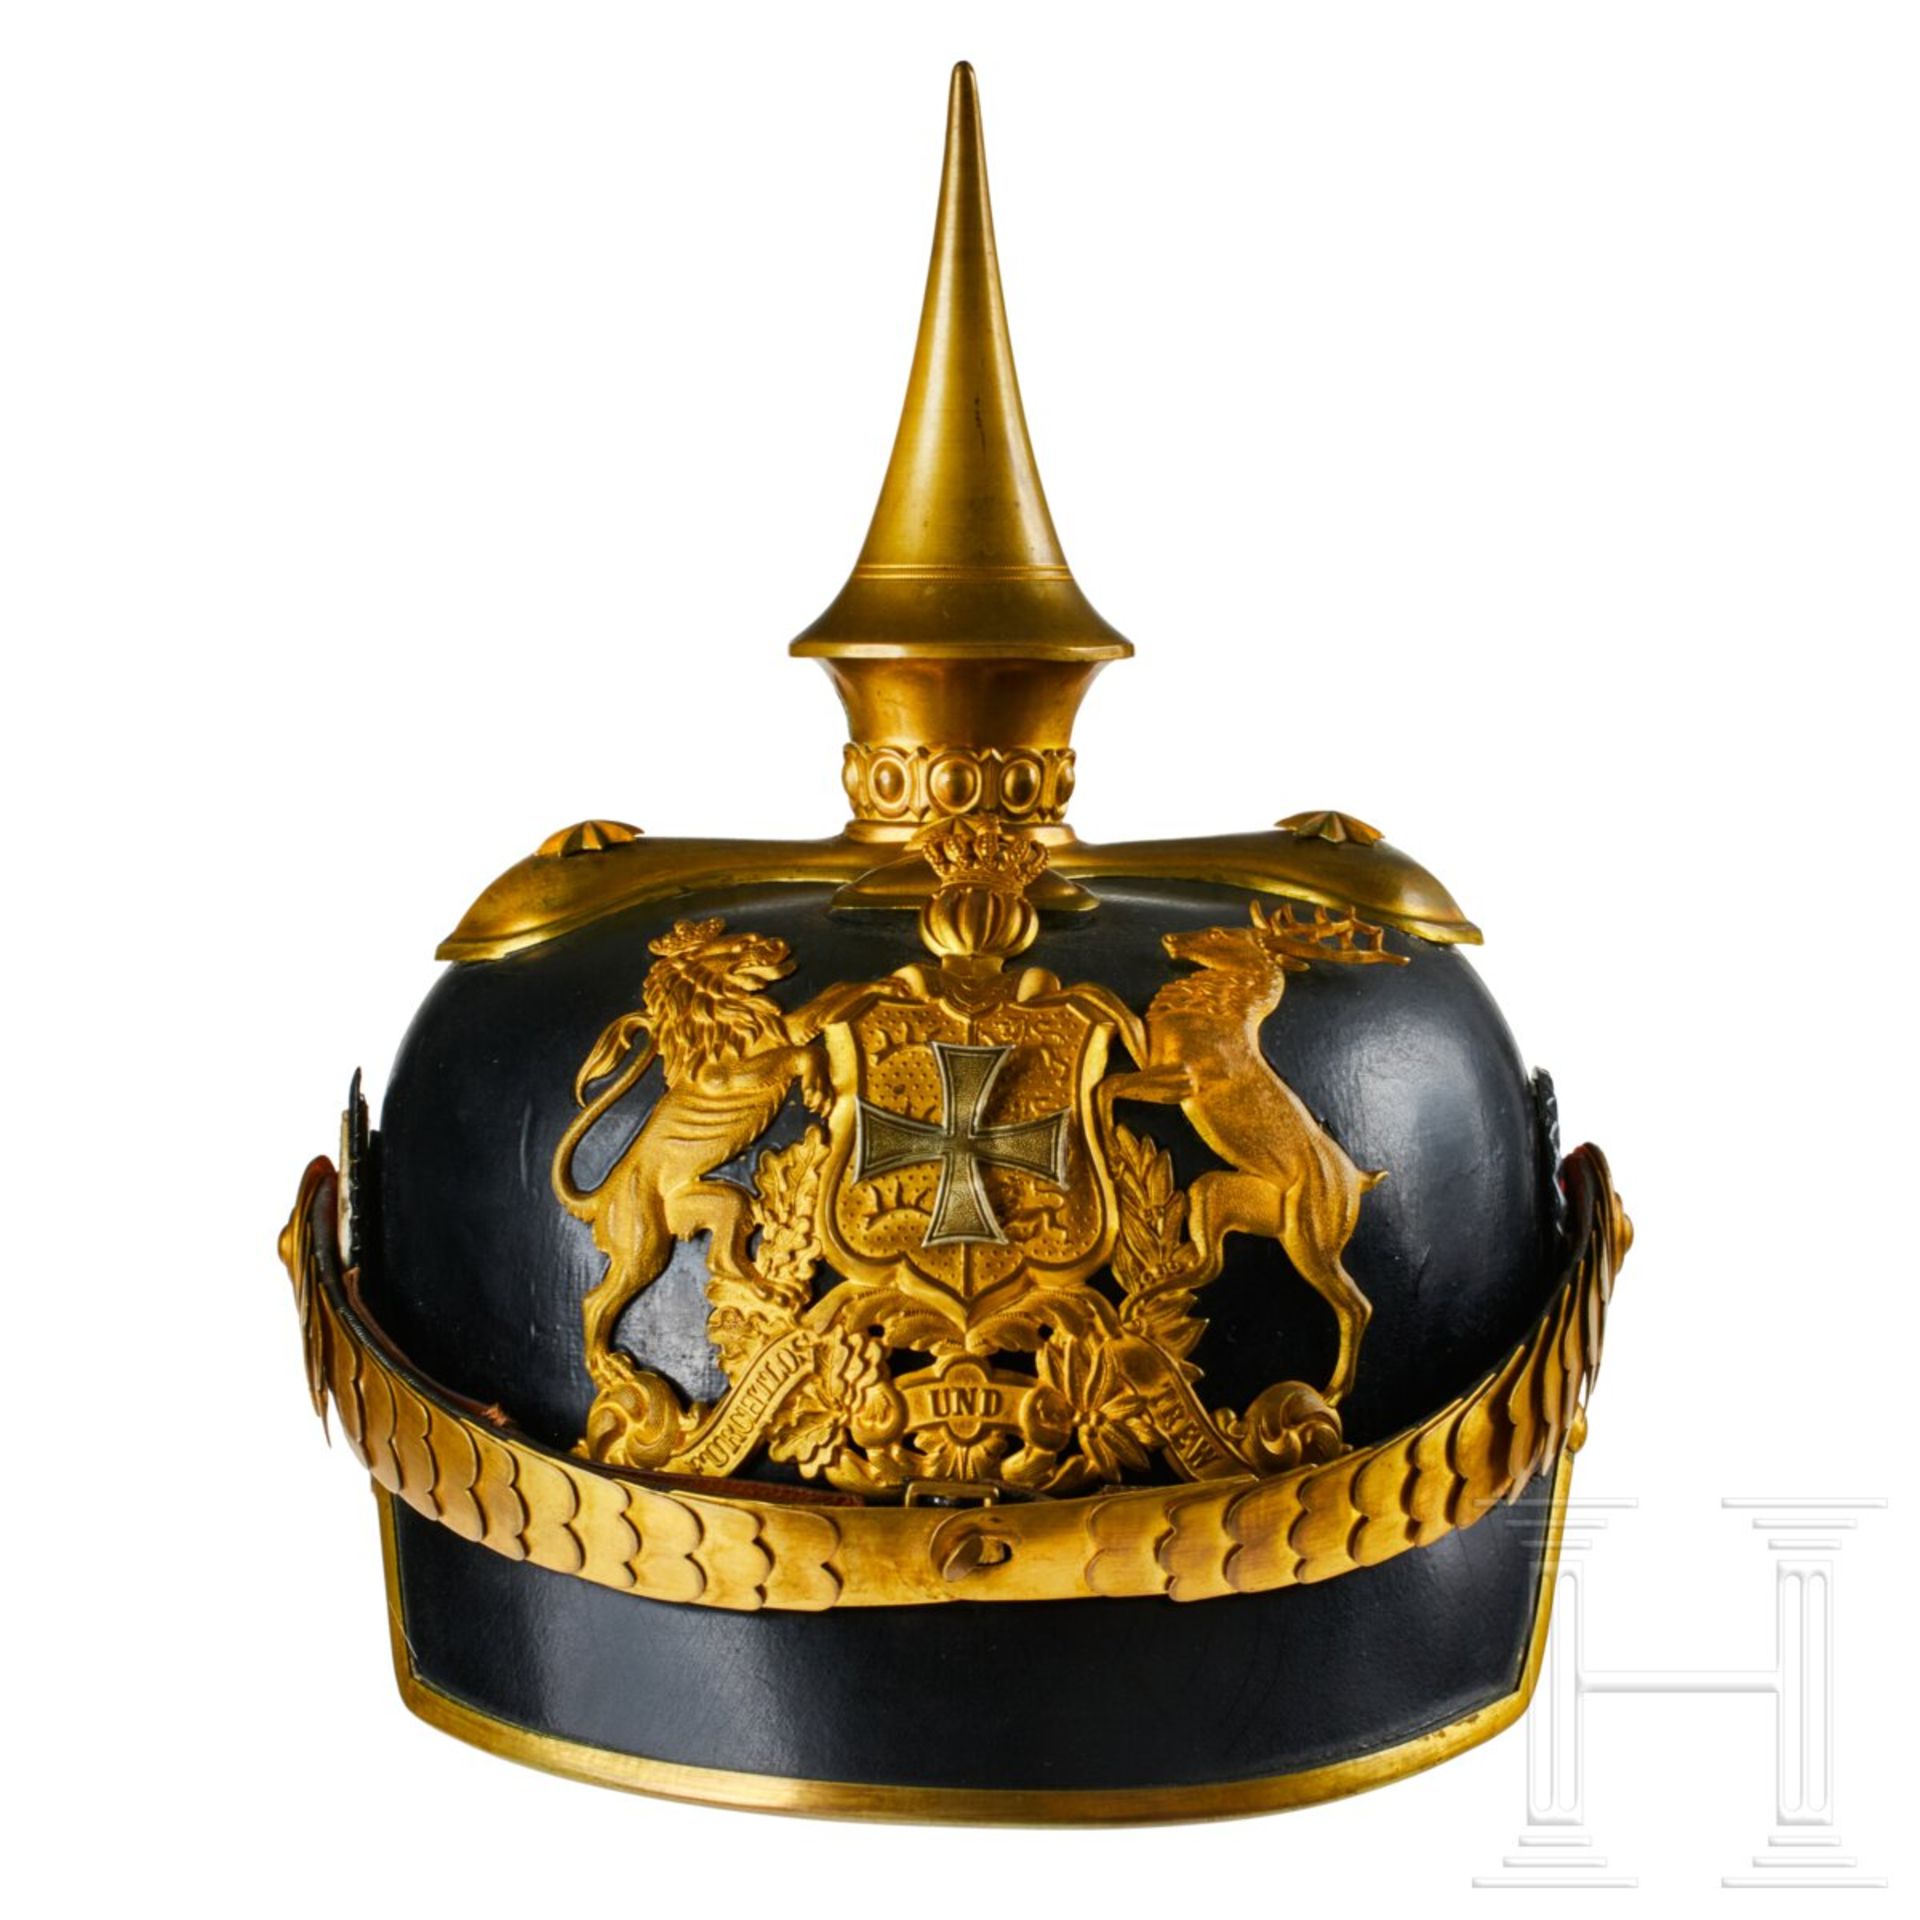 A helmet for IR 122 Württemberg Reserve Officers - Image 2 of 11